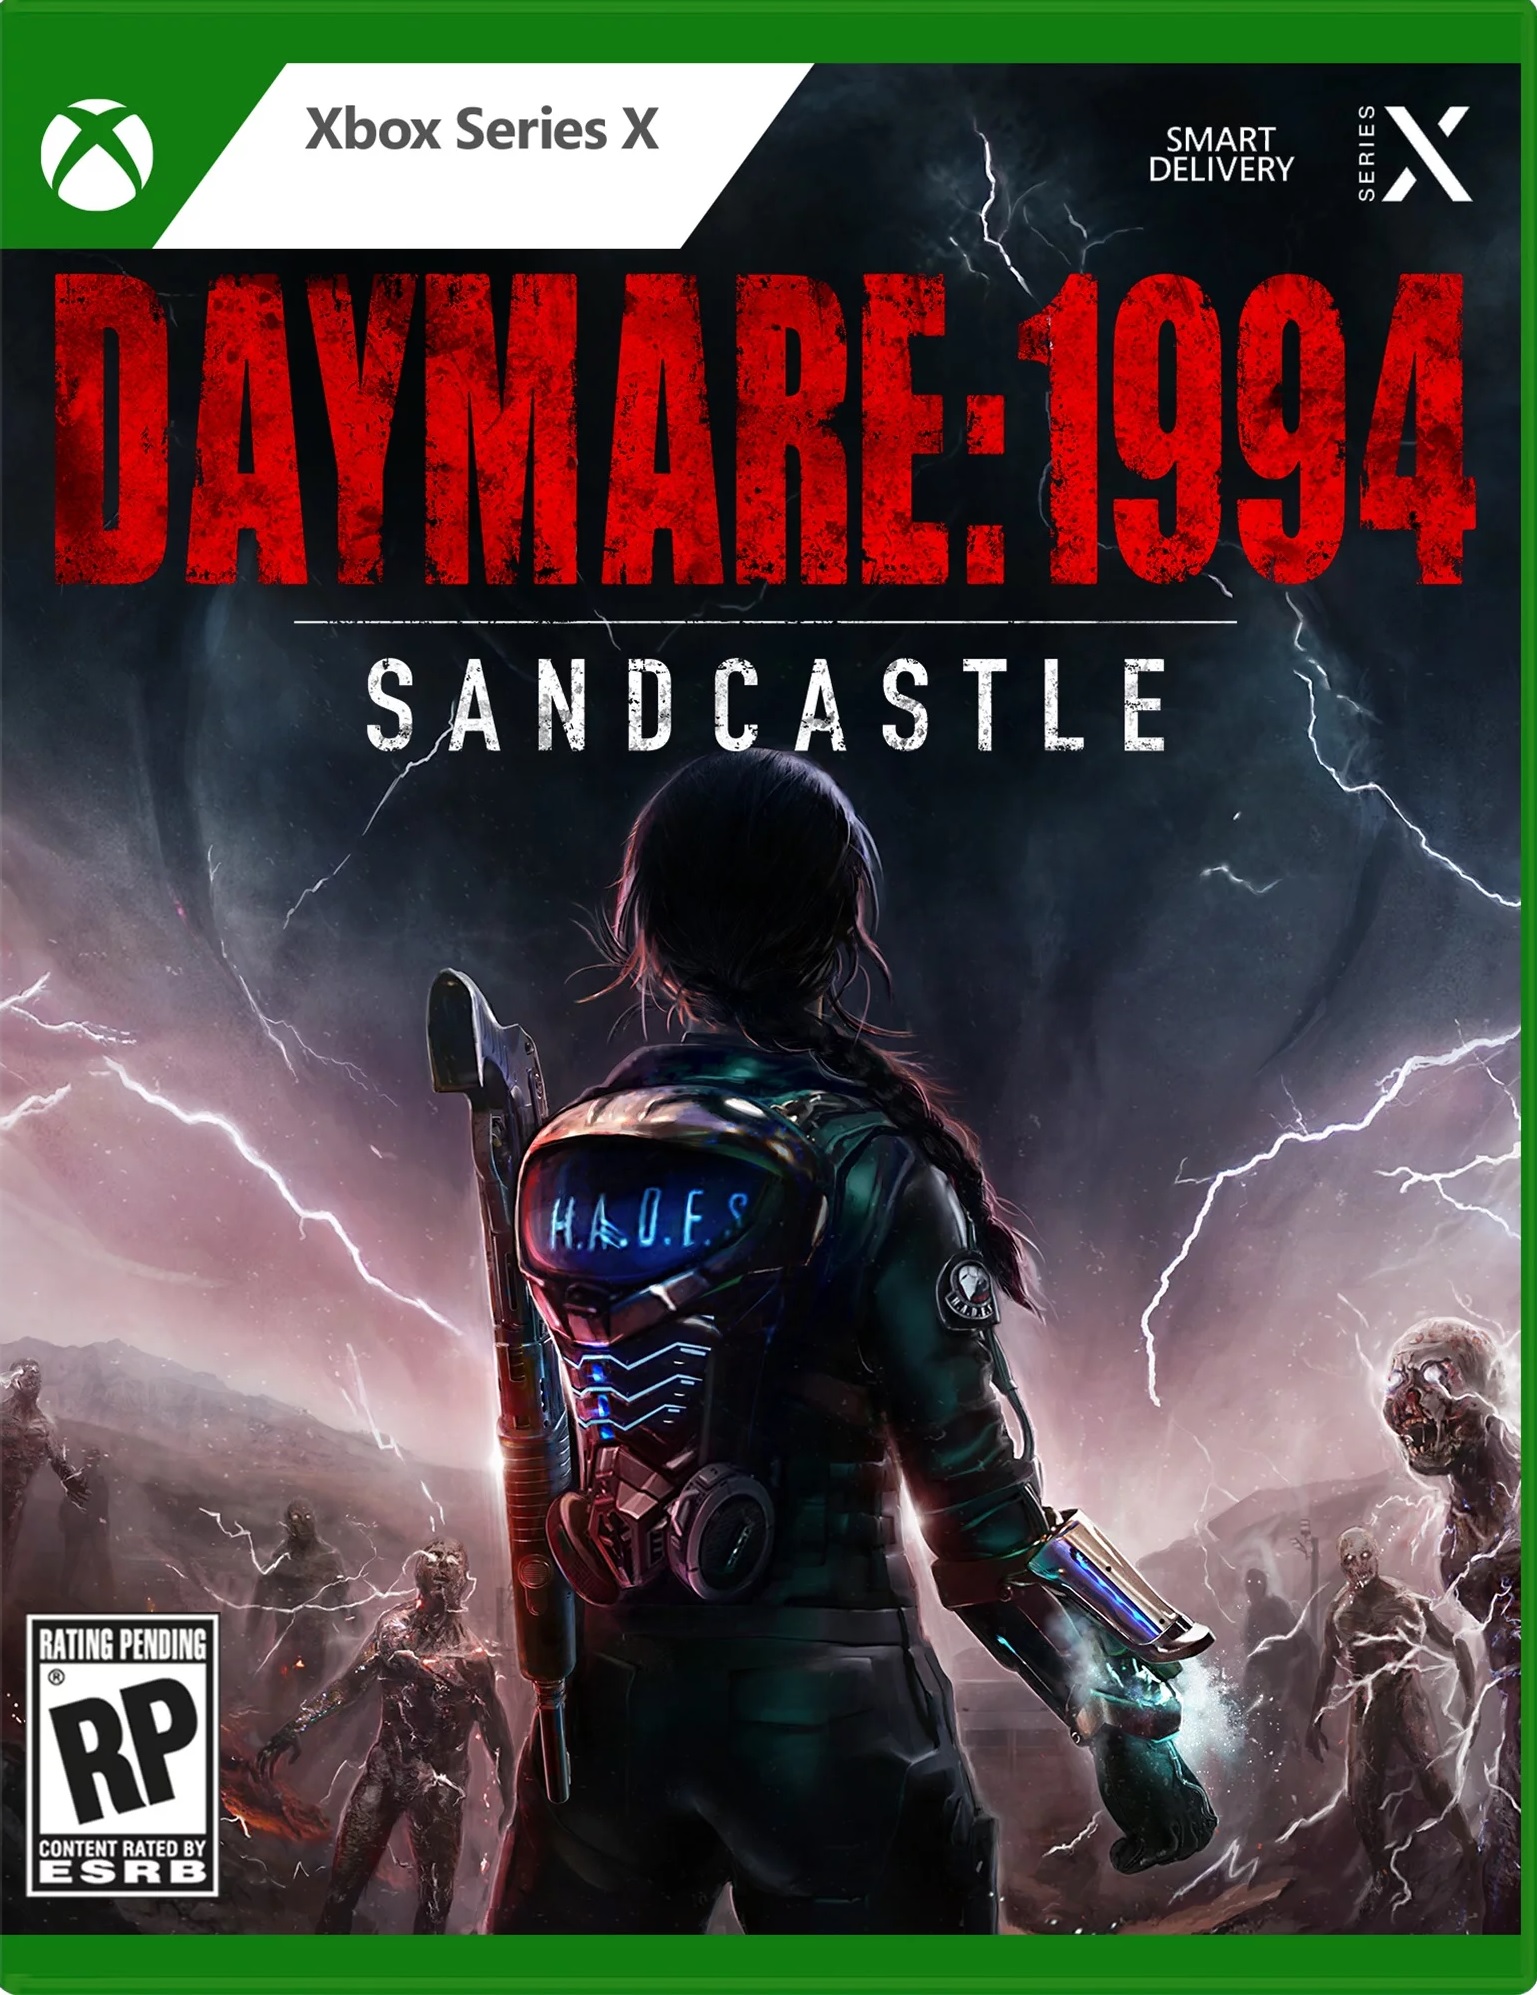 Daymare: 1994 Sandcastle Xbox Series X|S